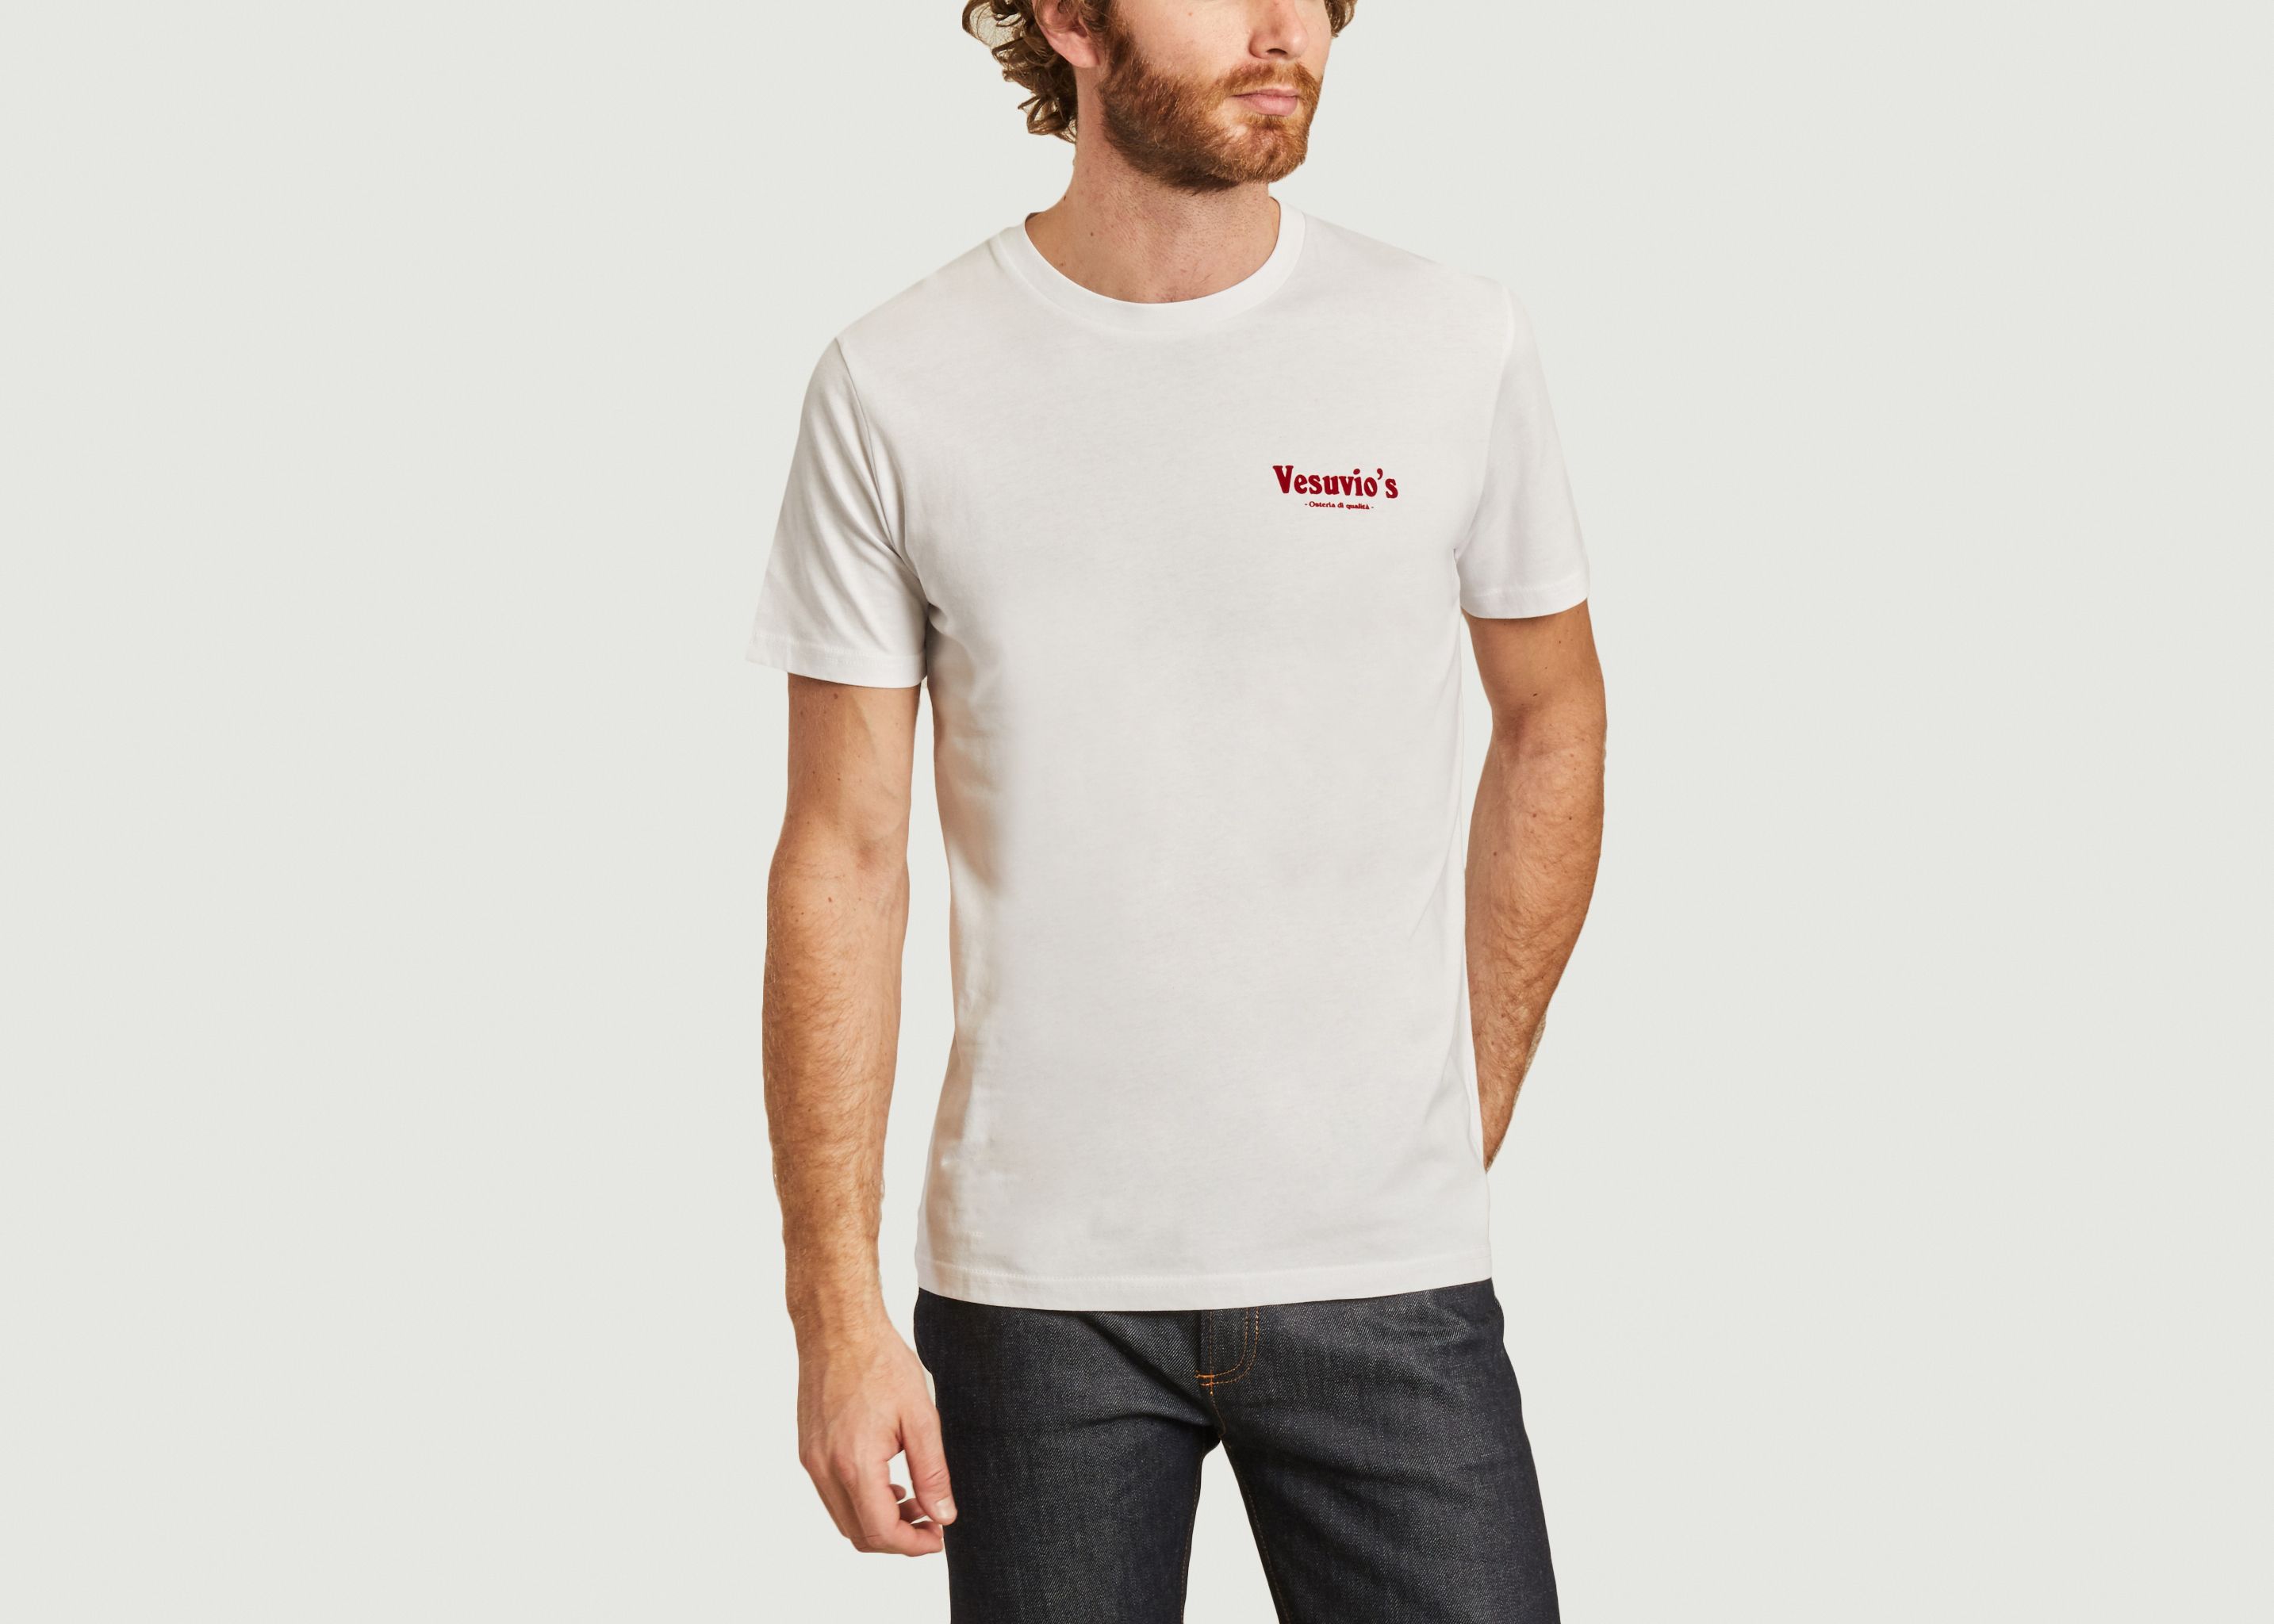 Vesuvio T-shirt - Harmony